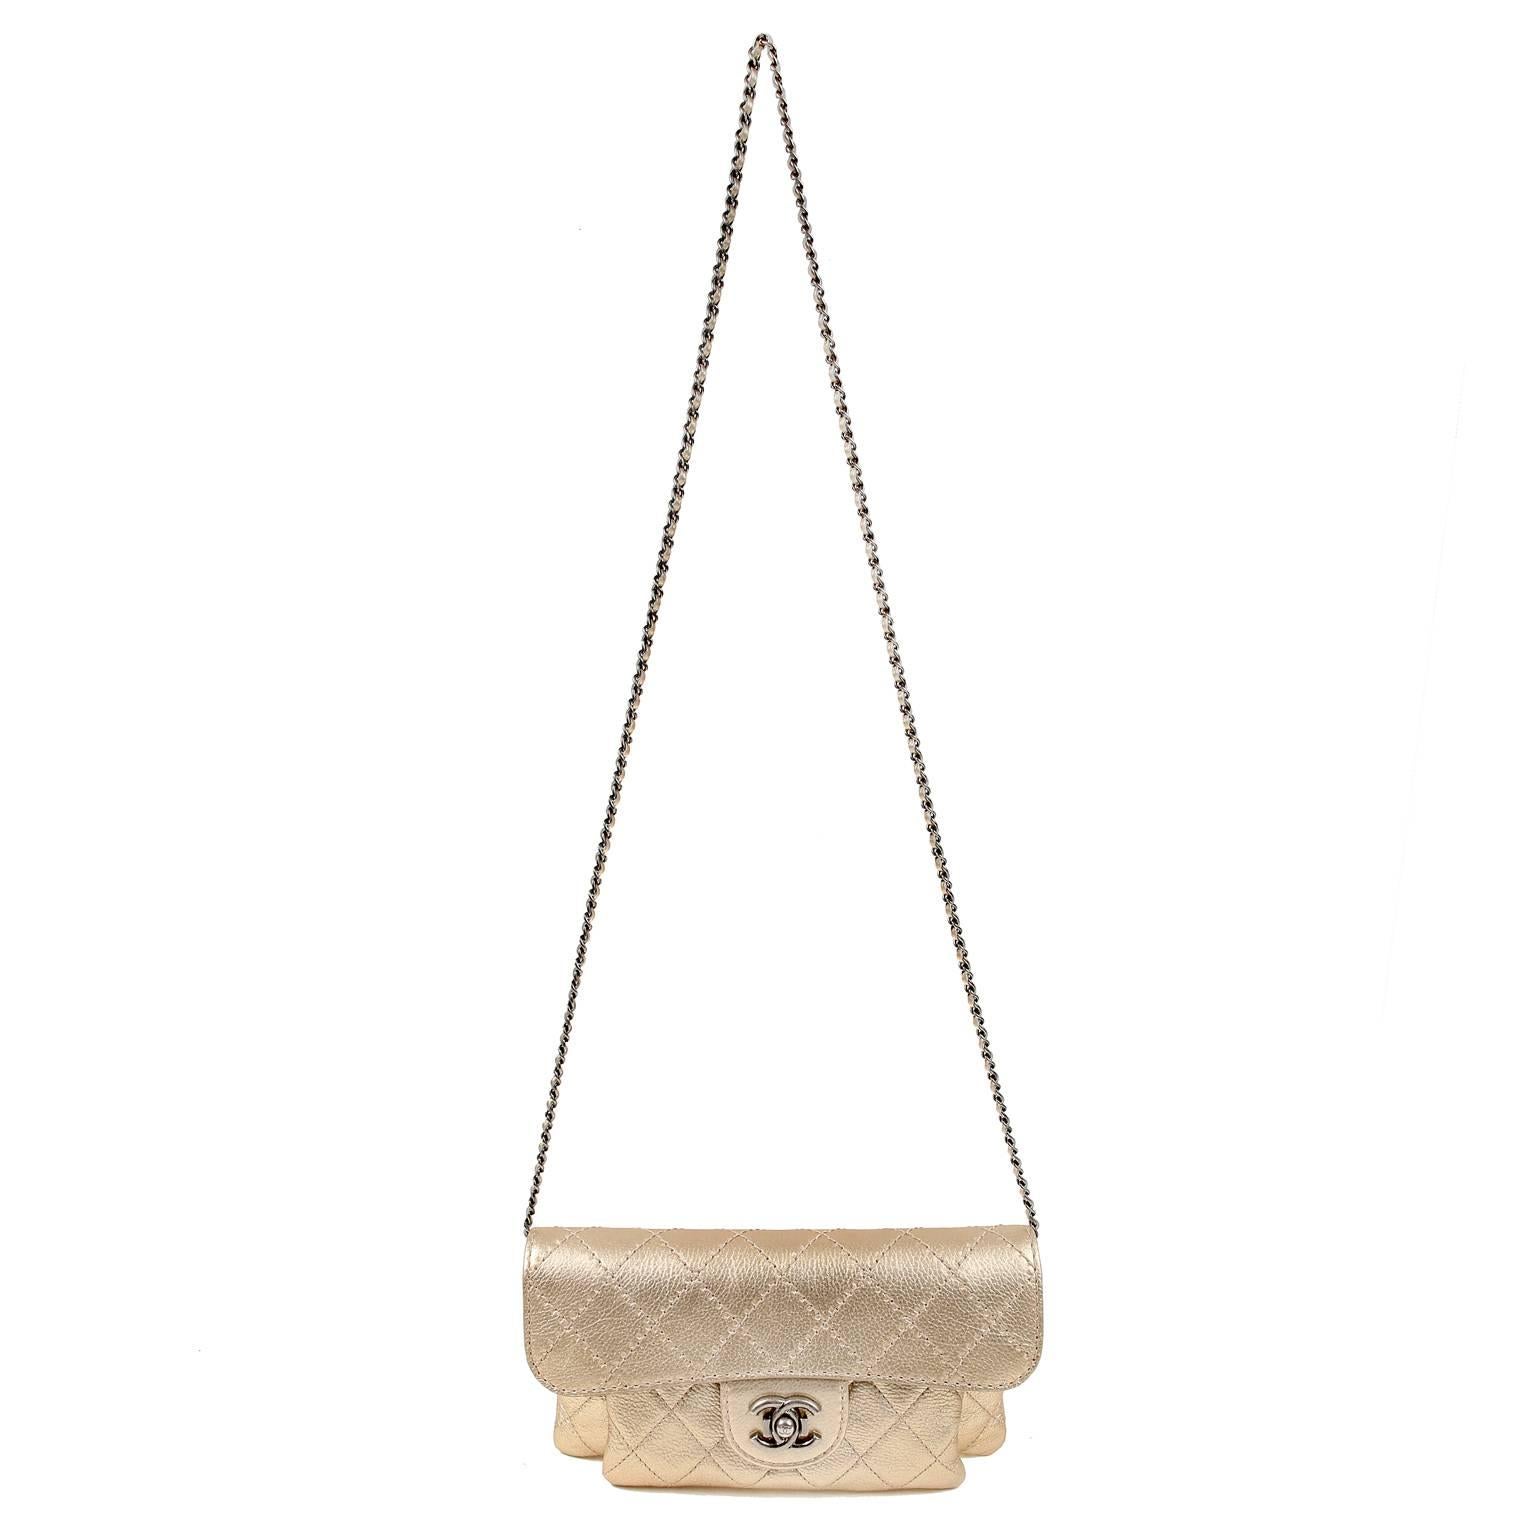 Chanel Metallic Gold Leather Cross Body Clutch Bag 6